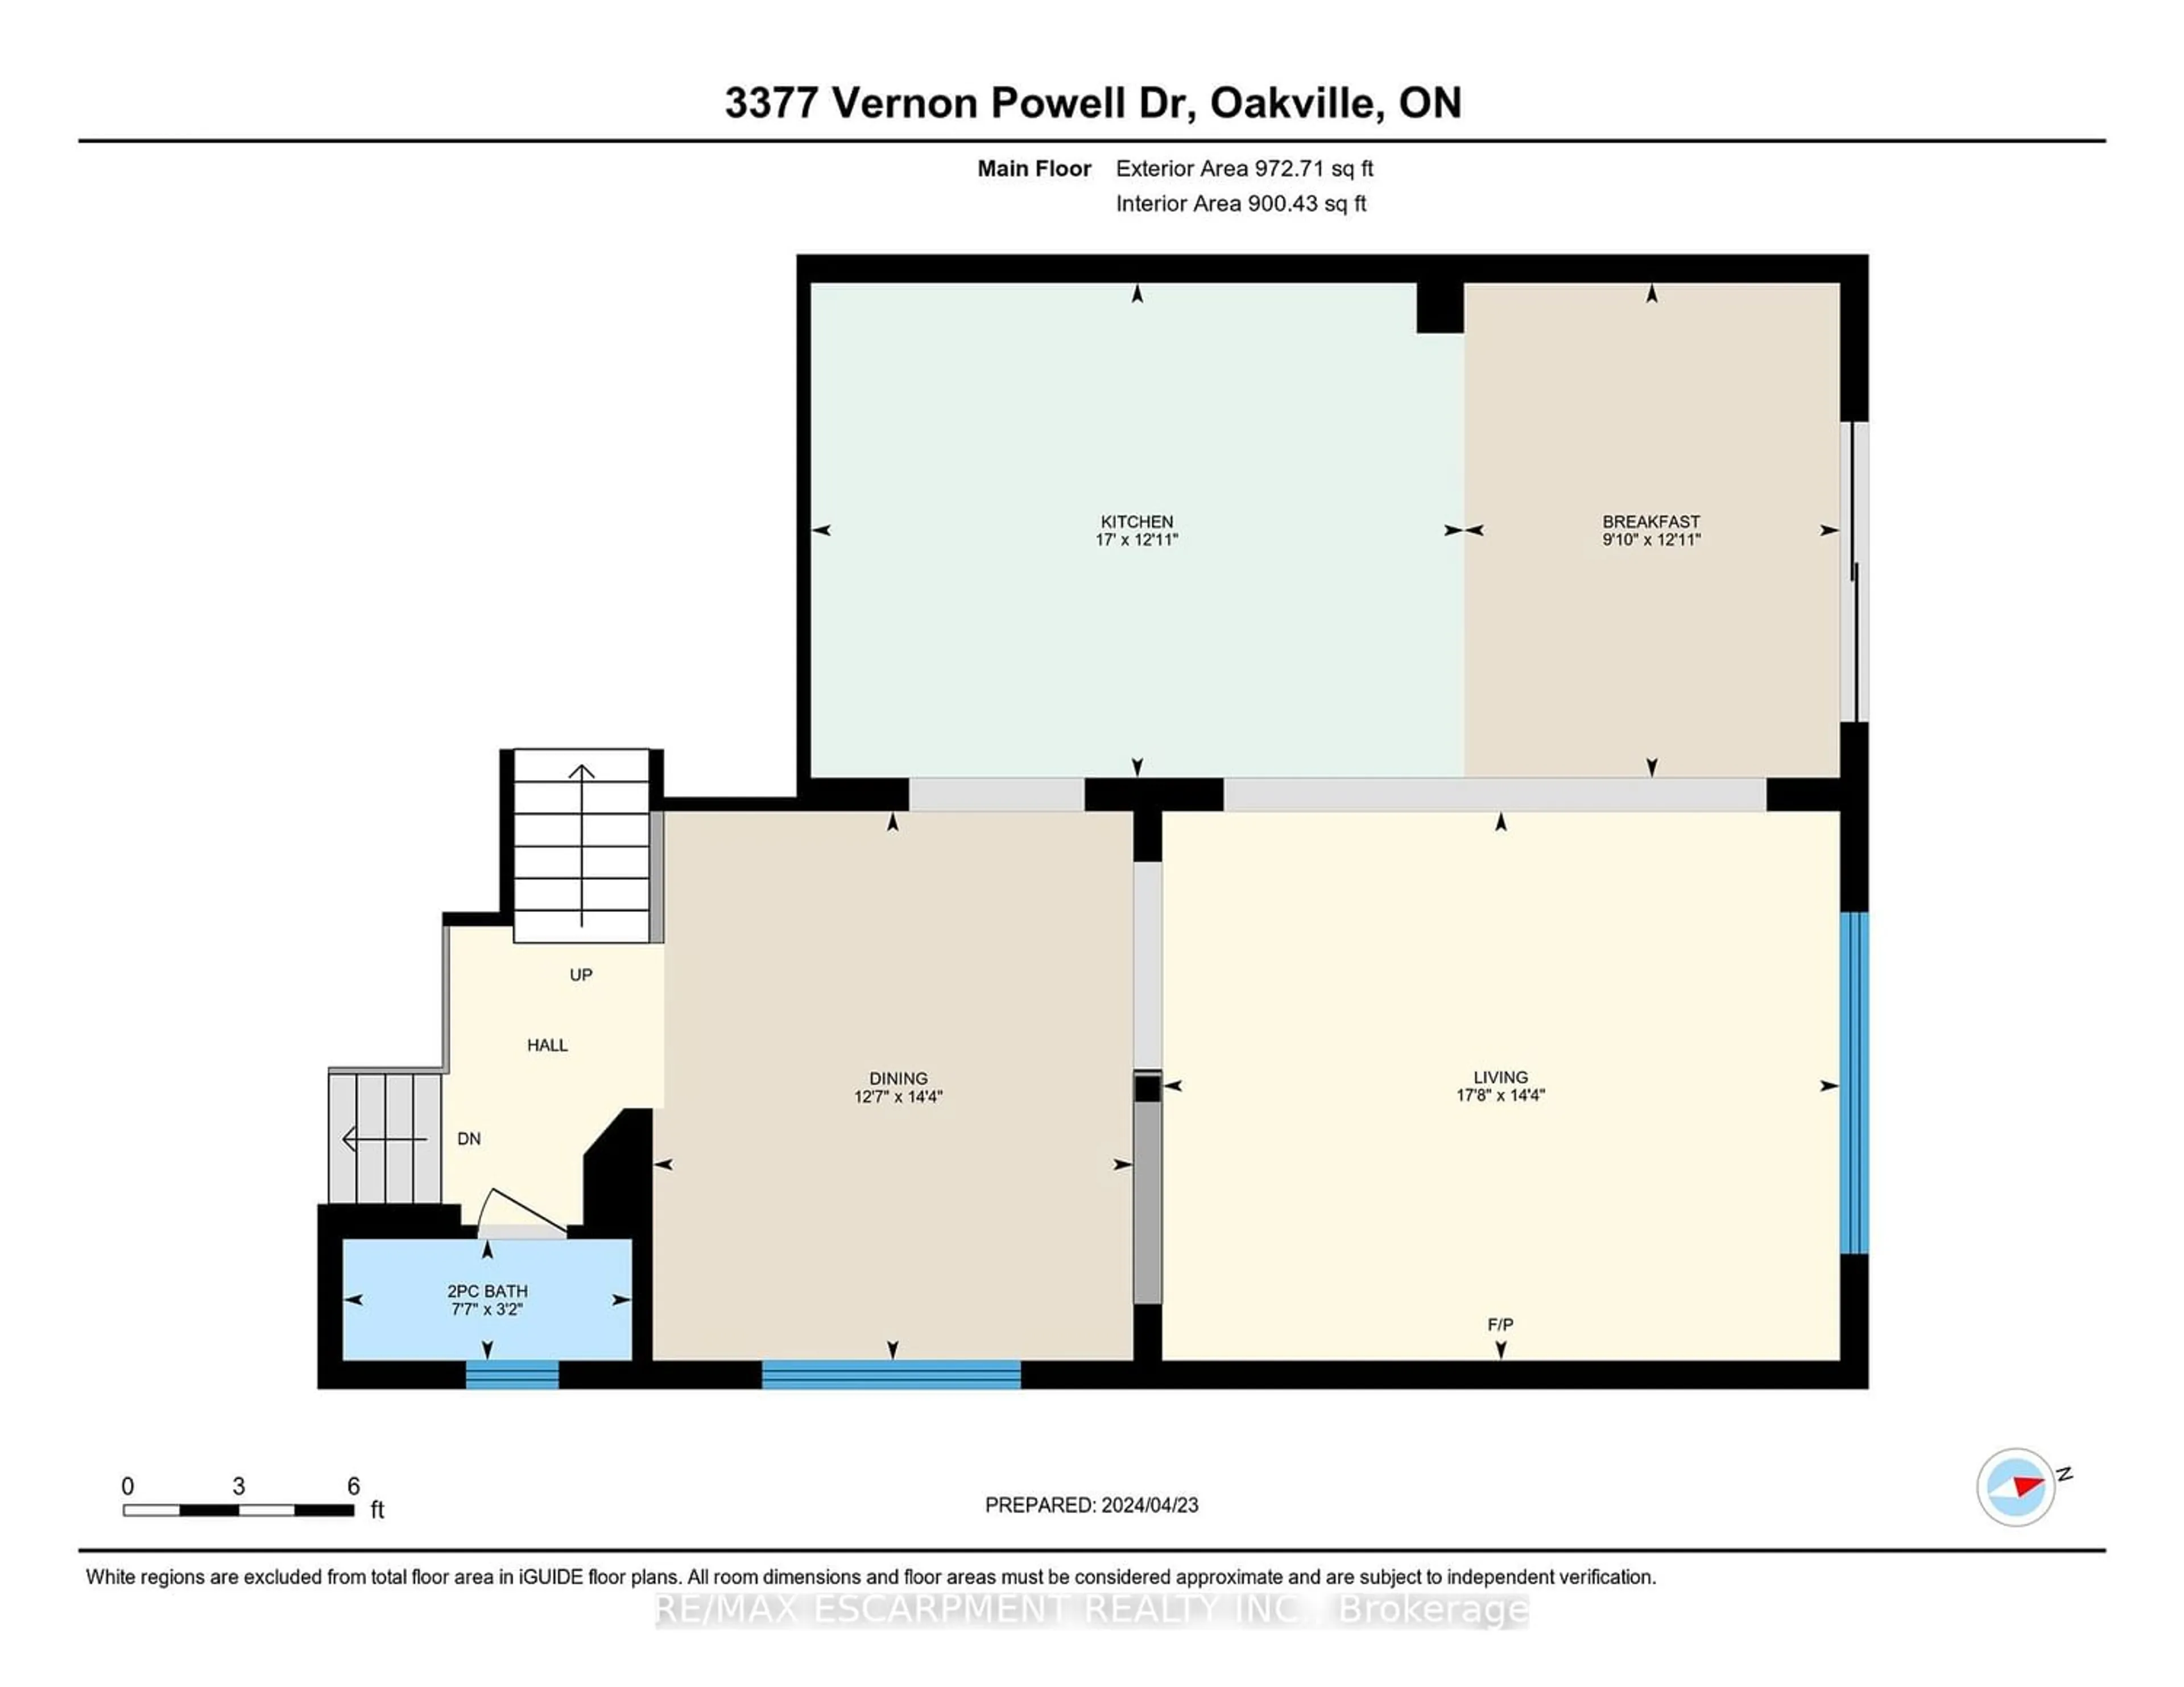 Floor plan for 3377 Vernon Powell Dr, Oakville Ontario L6H 0Y3